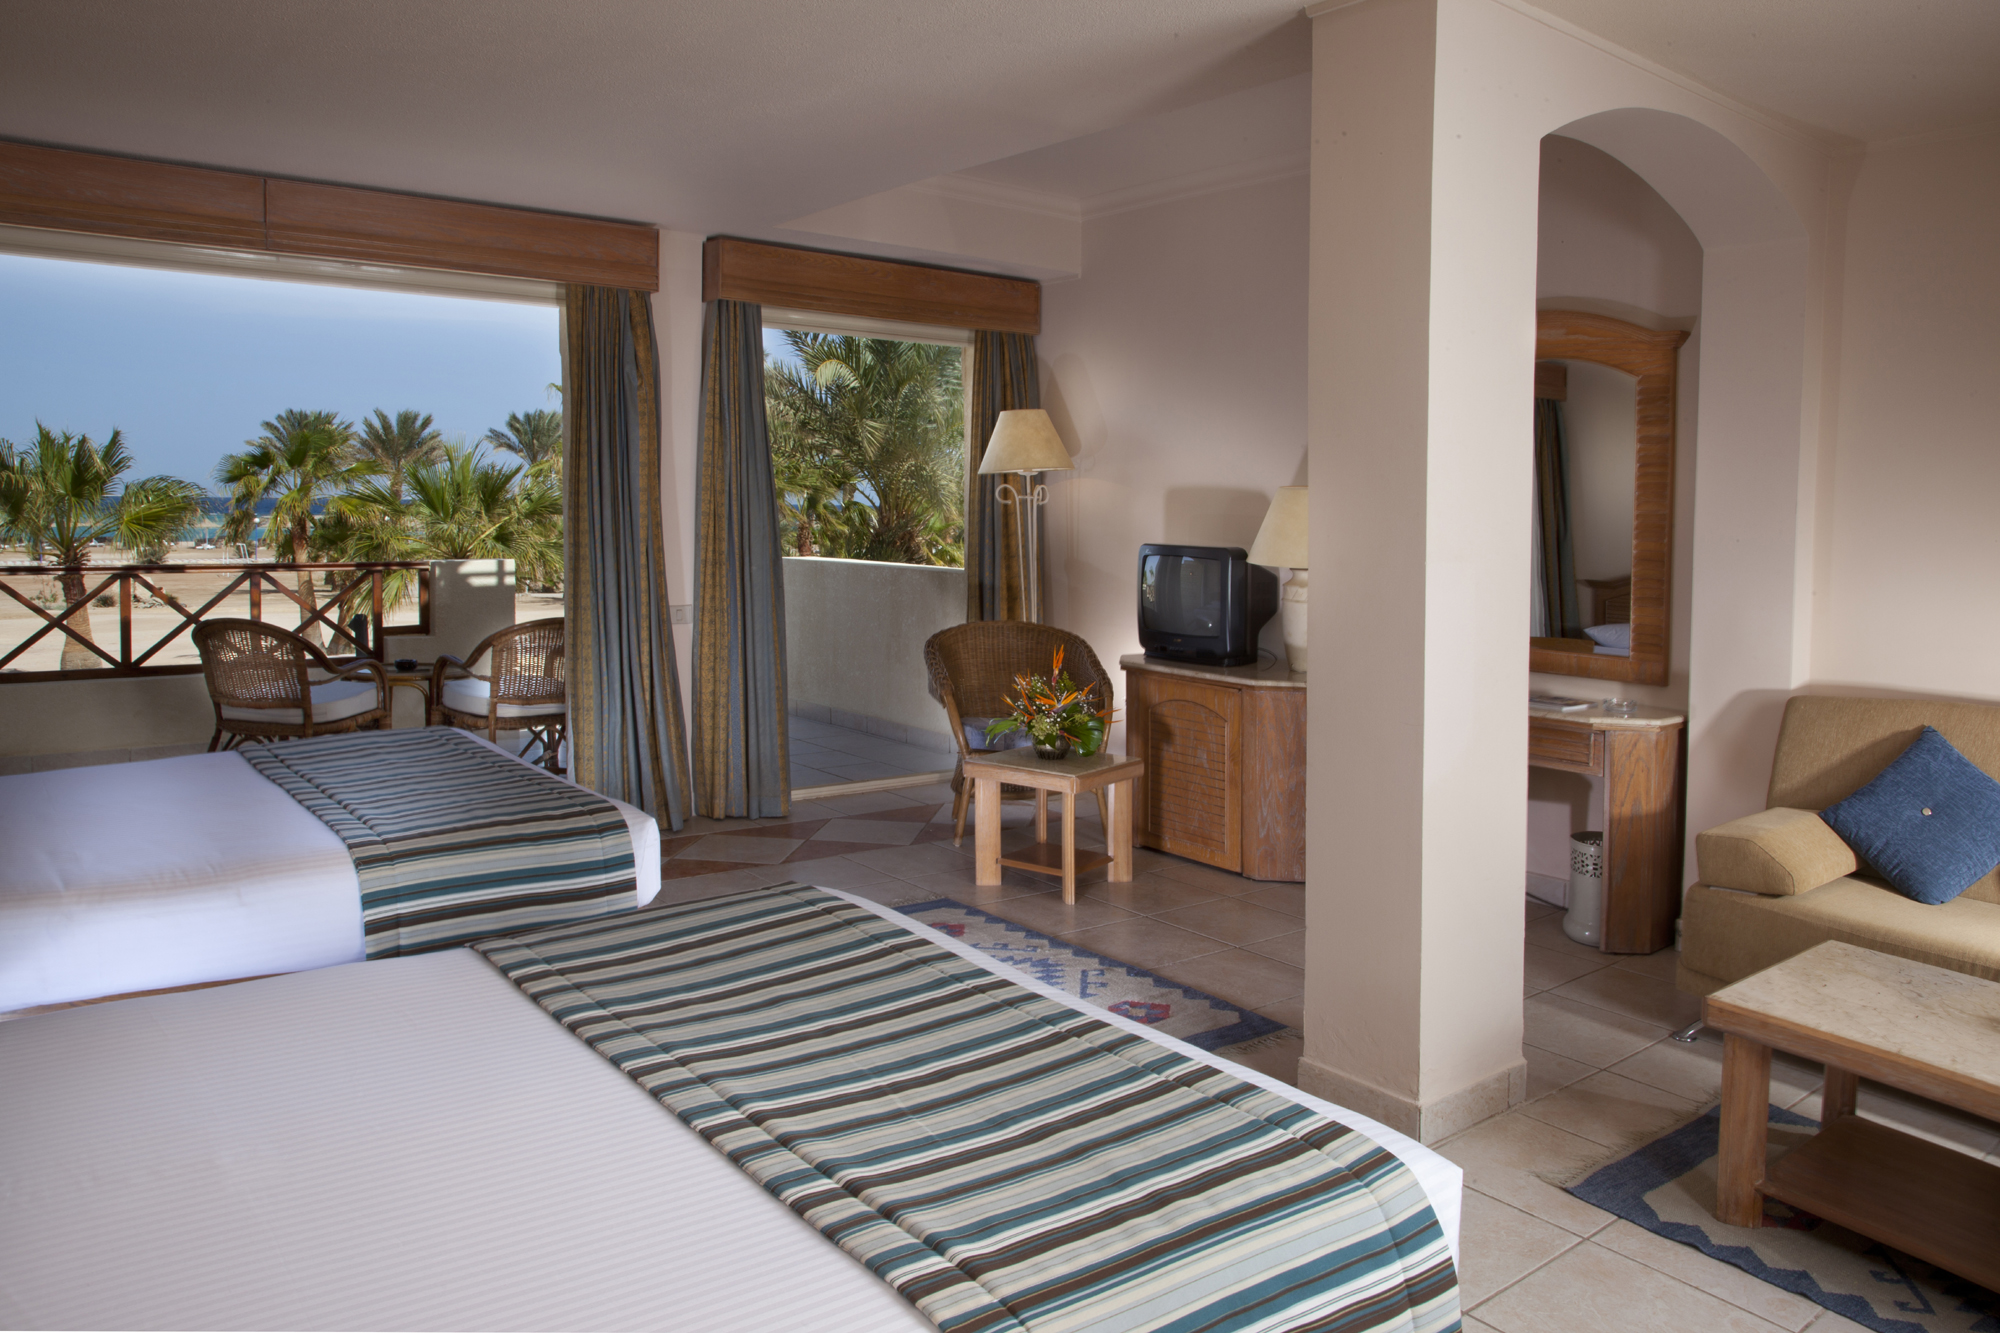 Coral beach 4 хургада. Coral Beach Resort Hurghada 4. Coral Beach Rotana Resort 4 Египет Хургада. Отель Coral Beach Hotel Hurghada. Отель Корал Бич Хургада Египет.